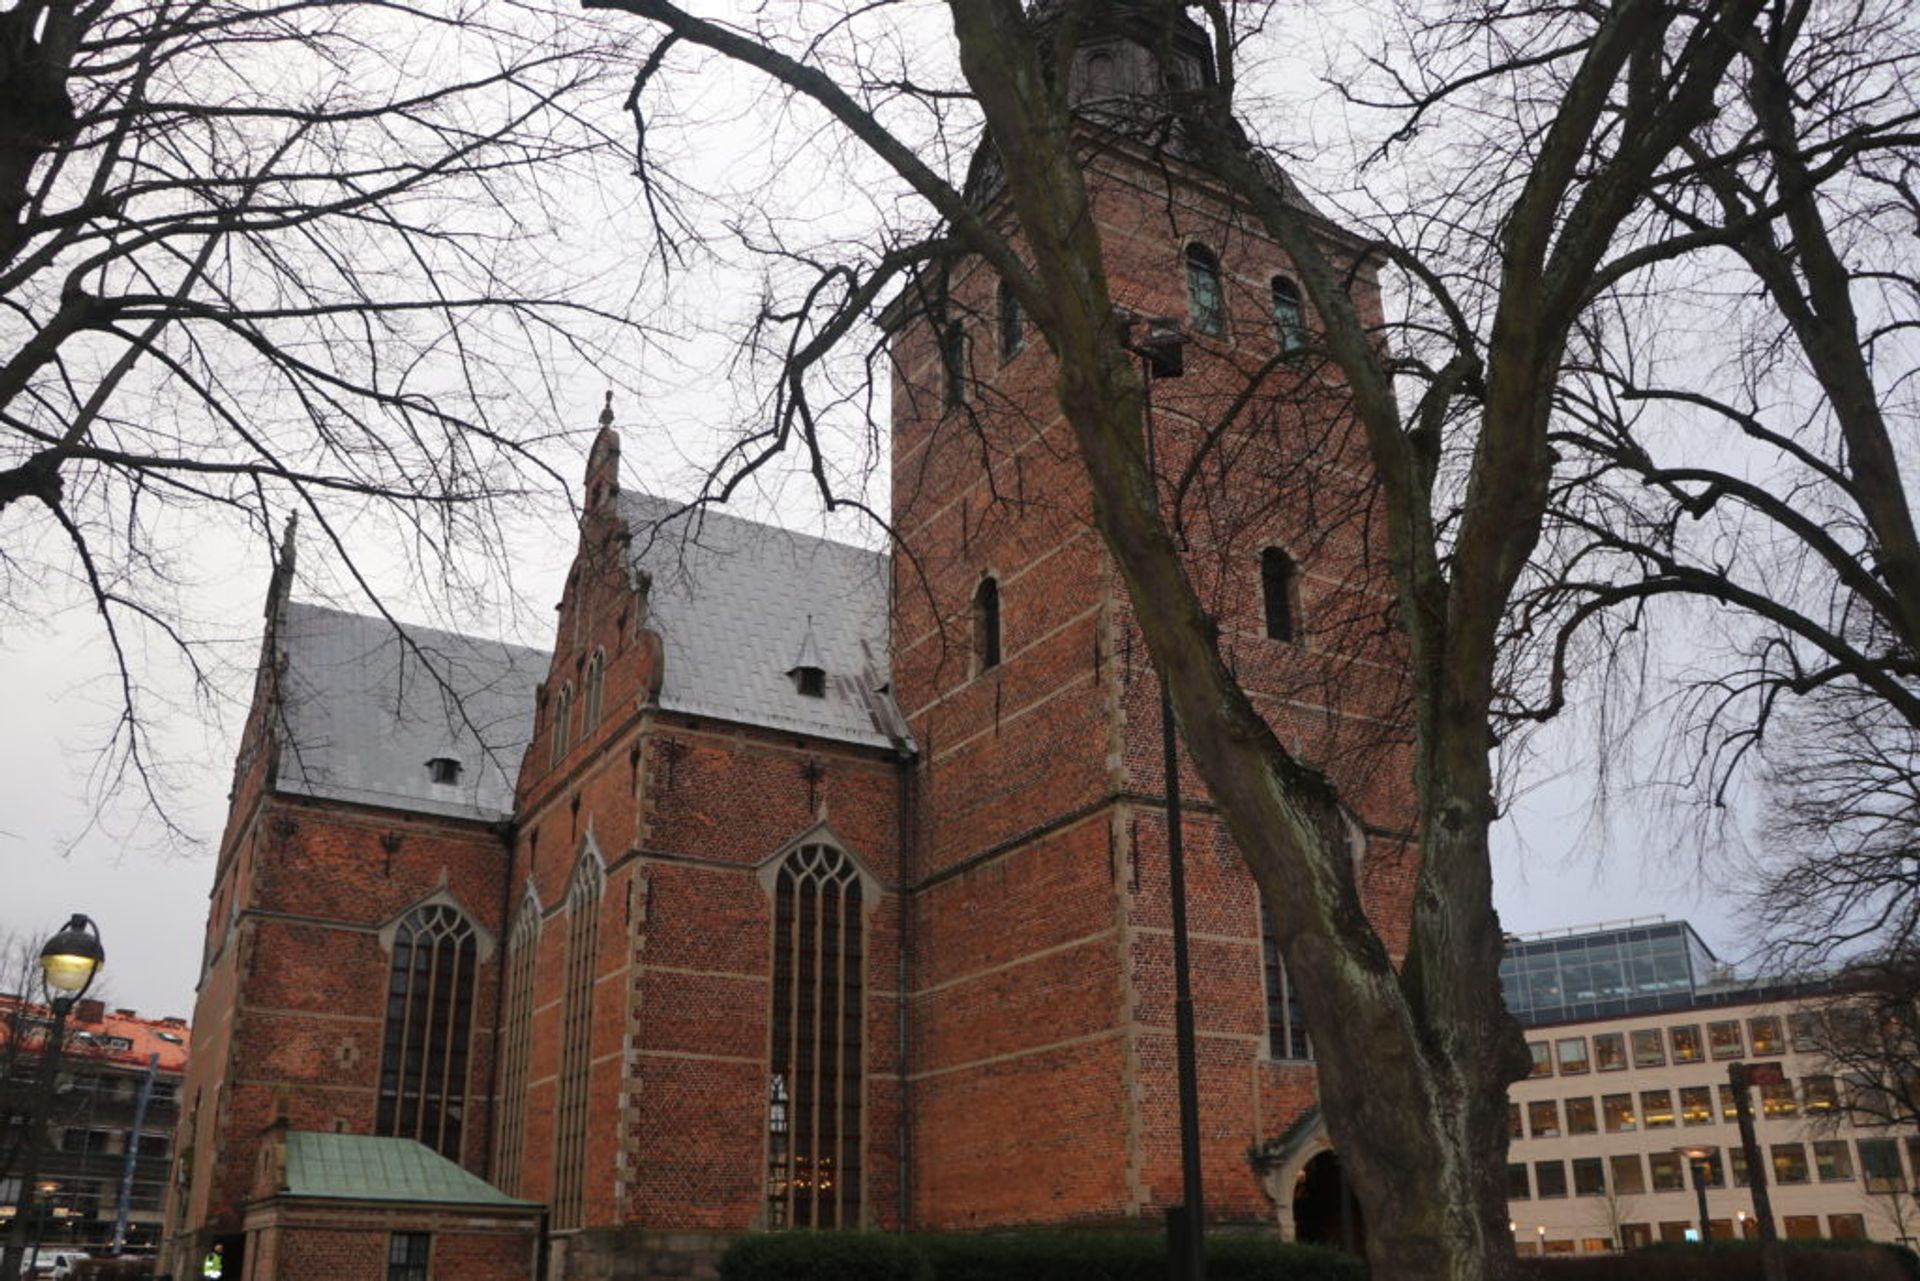 a photo of Heliga Trefaldighetskyrkan, Holy Trinity Church founded by King Christian IV